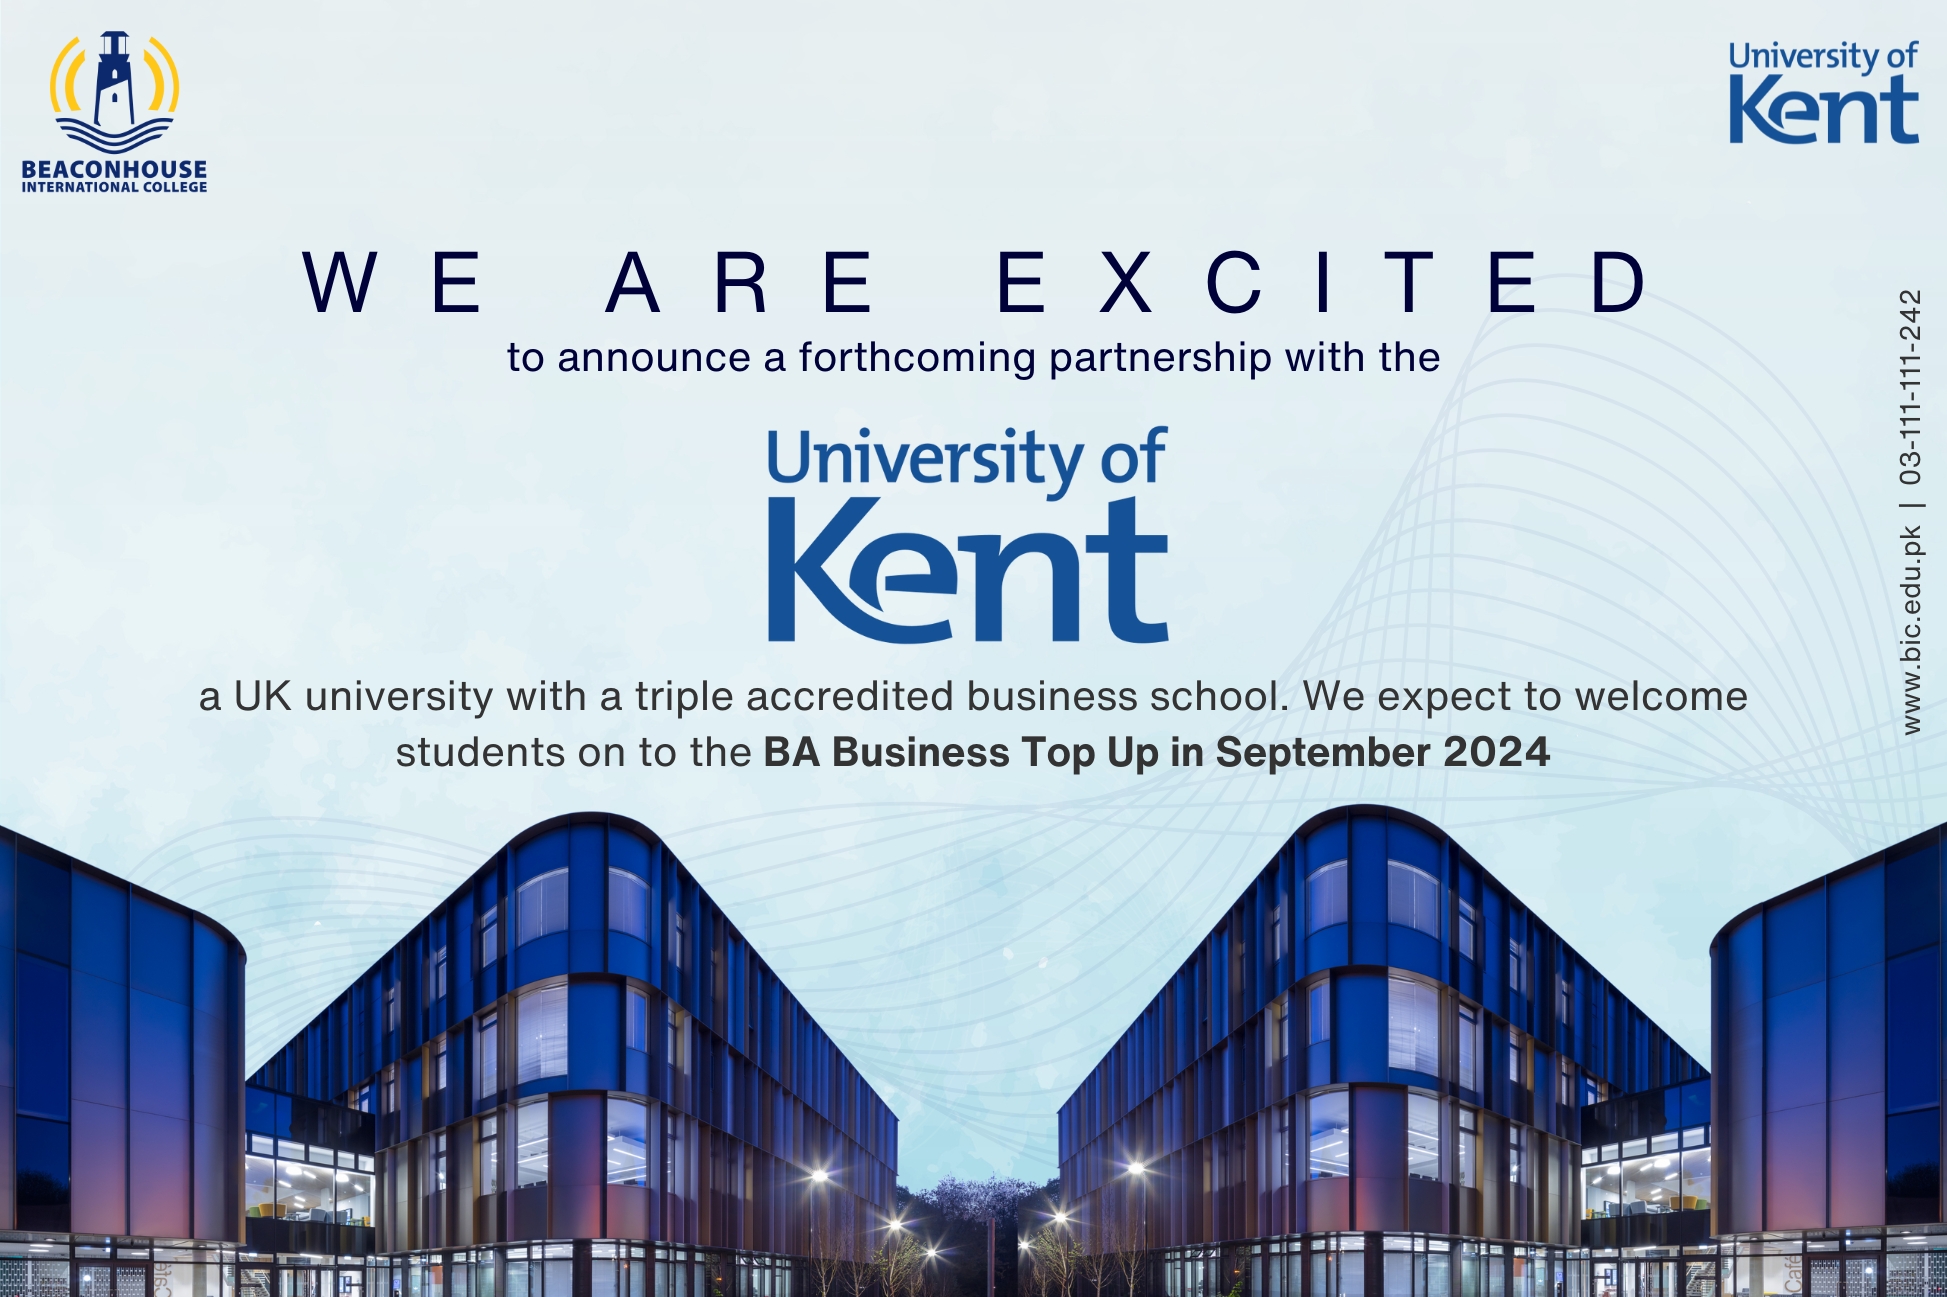 Partnership with the University of Kent